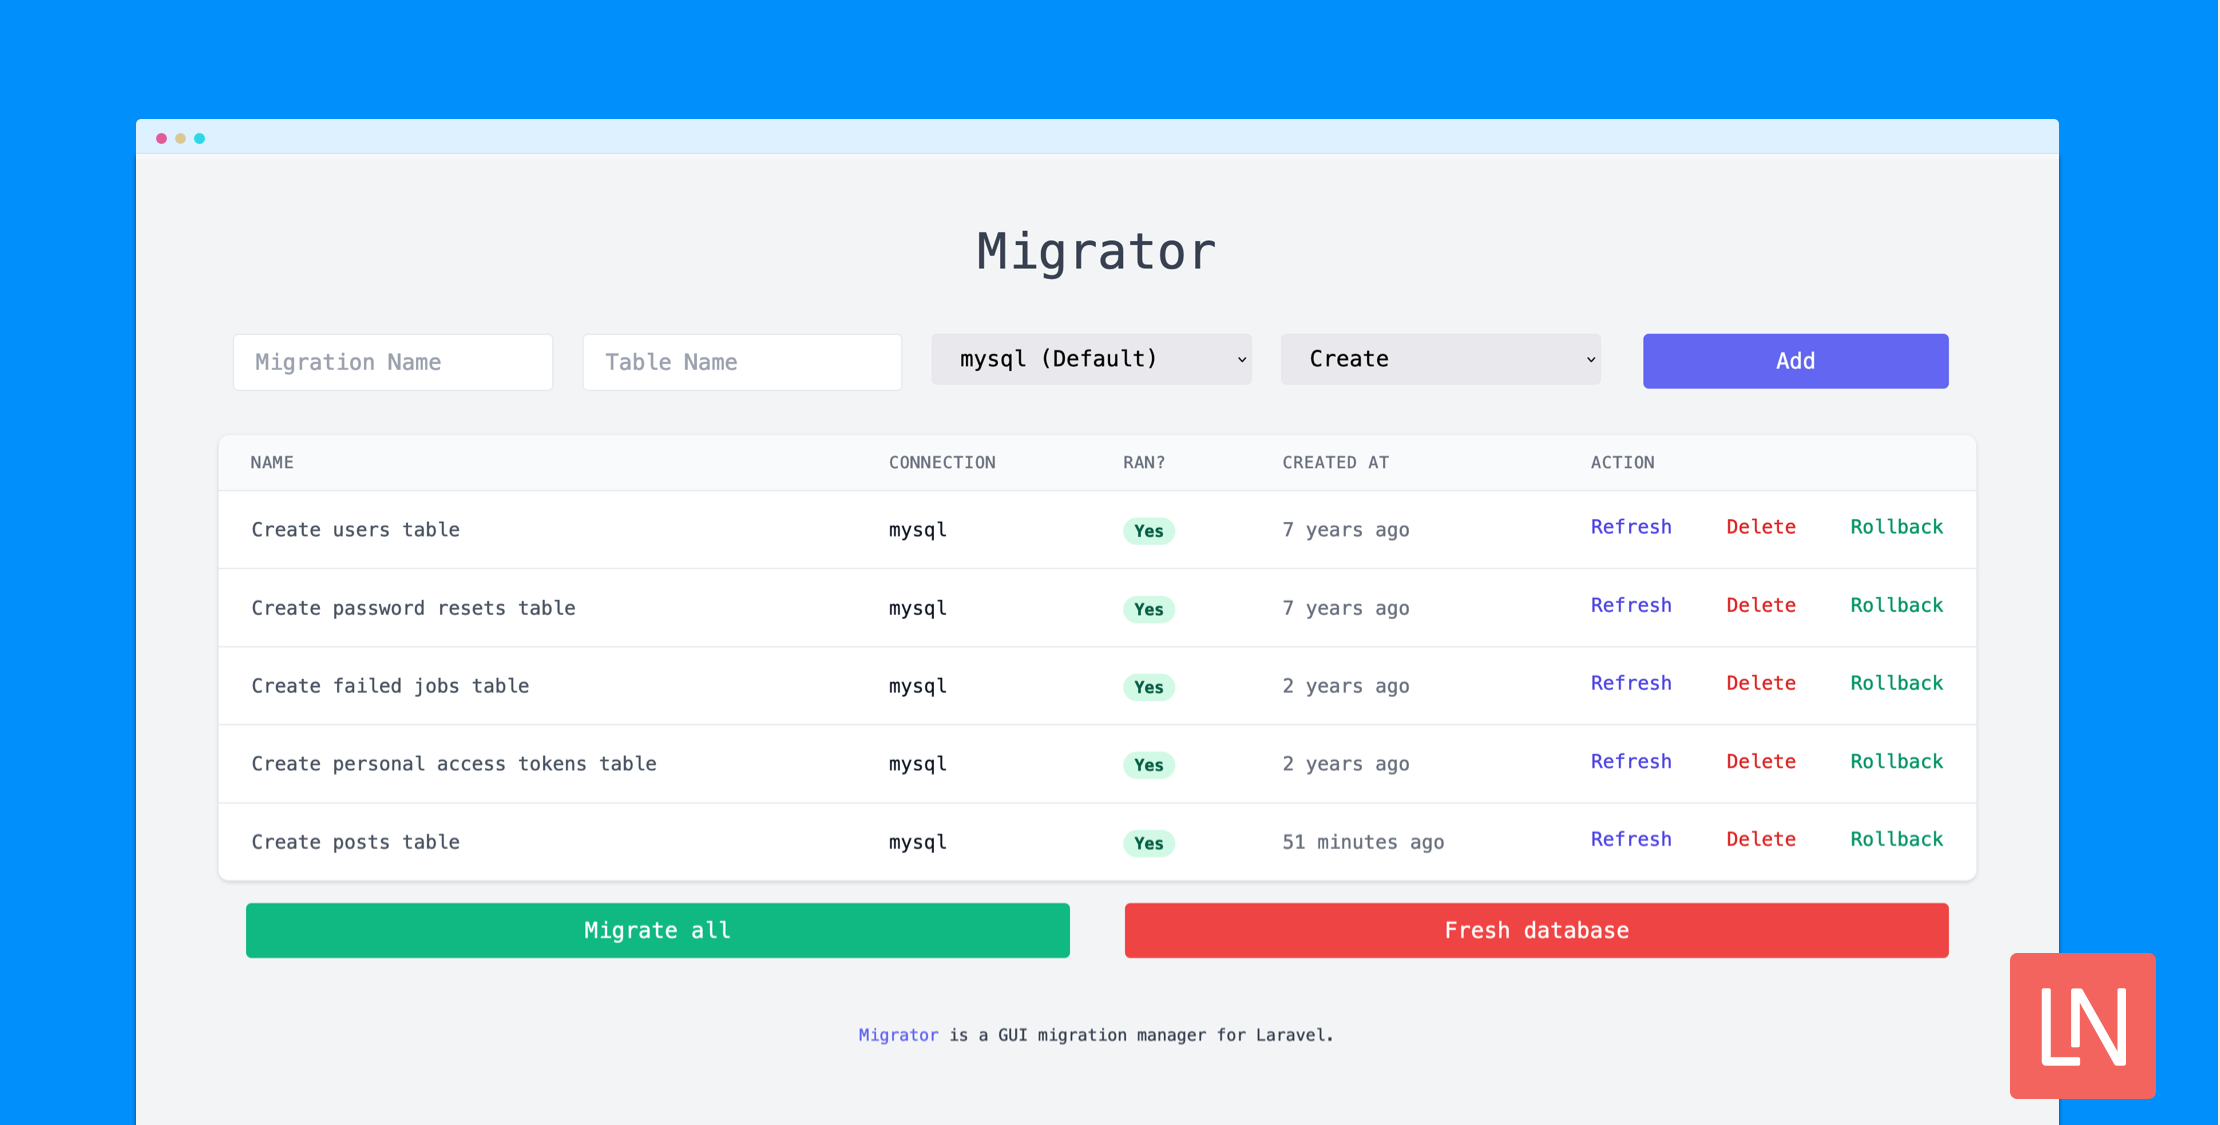 Migrator is a GUI Migration Manager for Laravel image